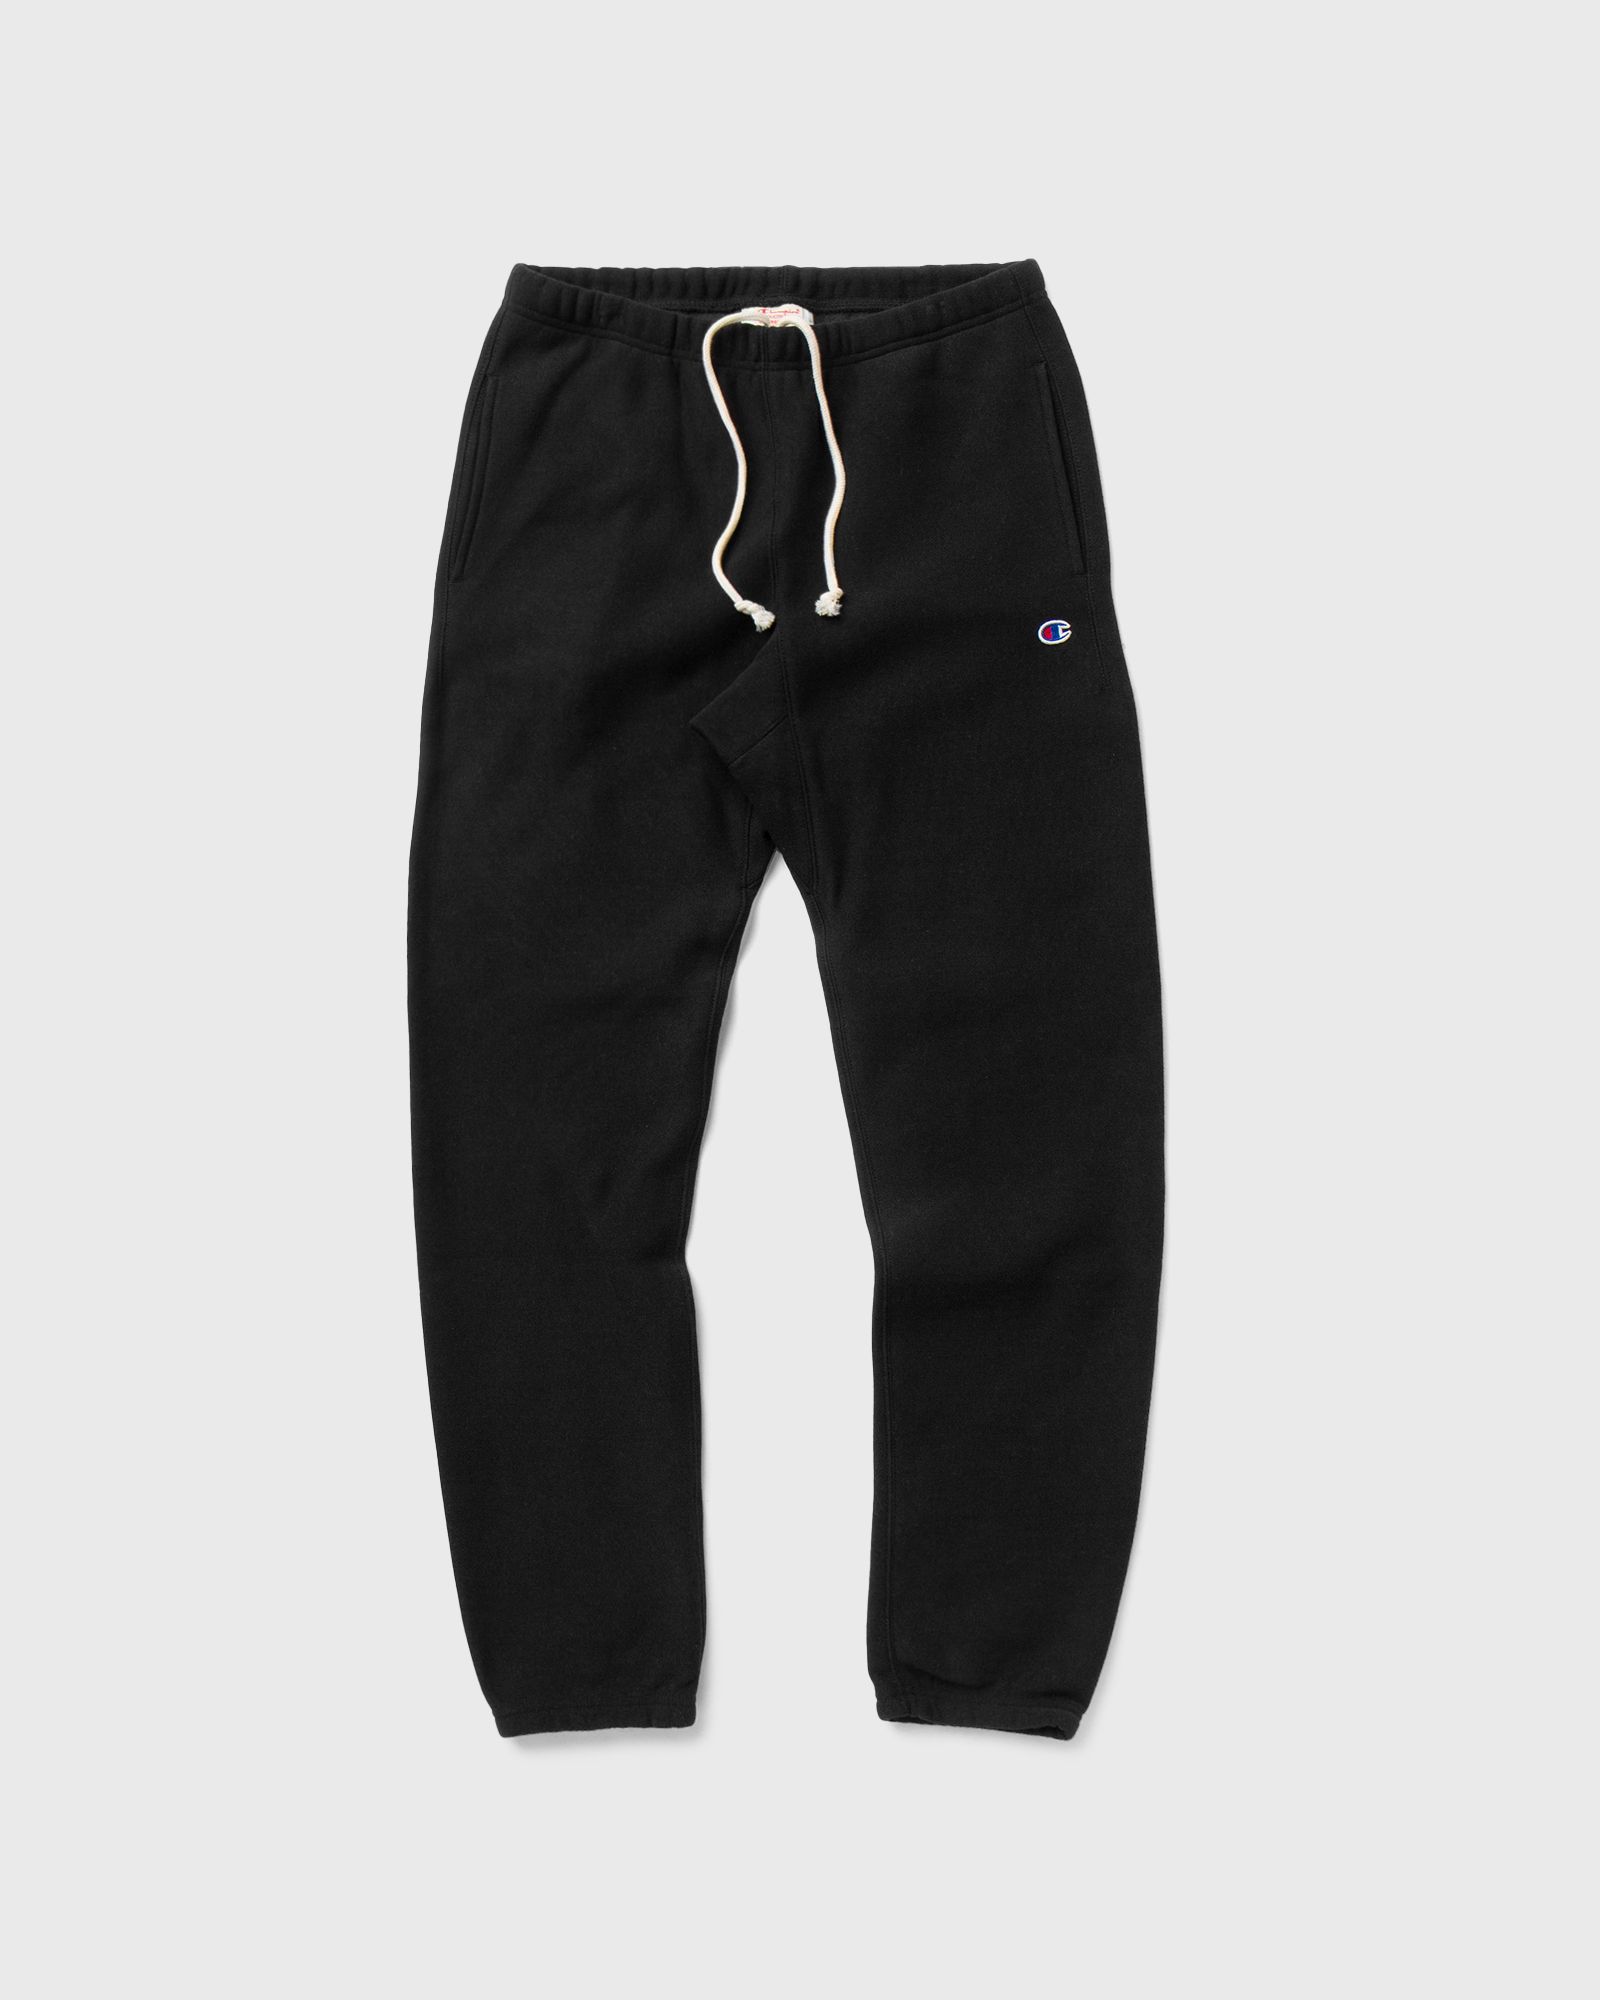 CHAMPION - reverse weave elastic cuff pants men sweatpants black in größe:xl